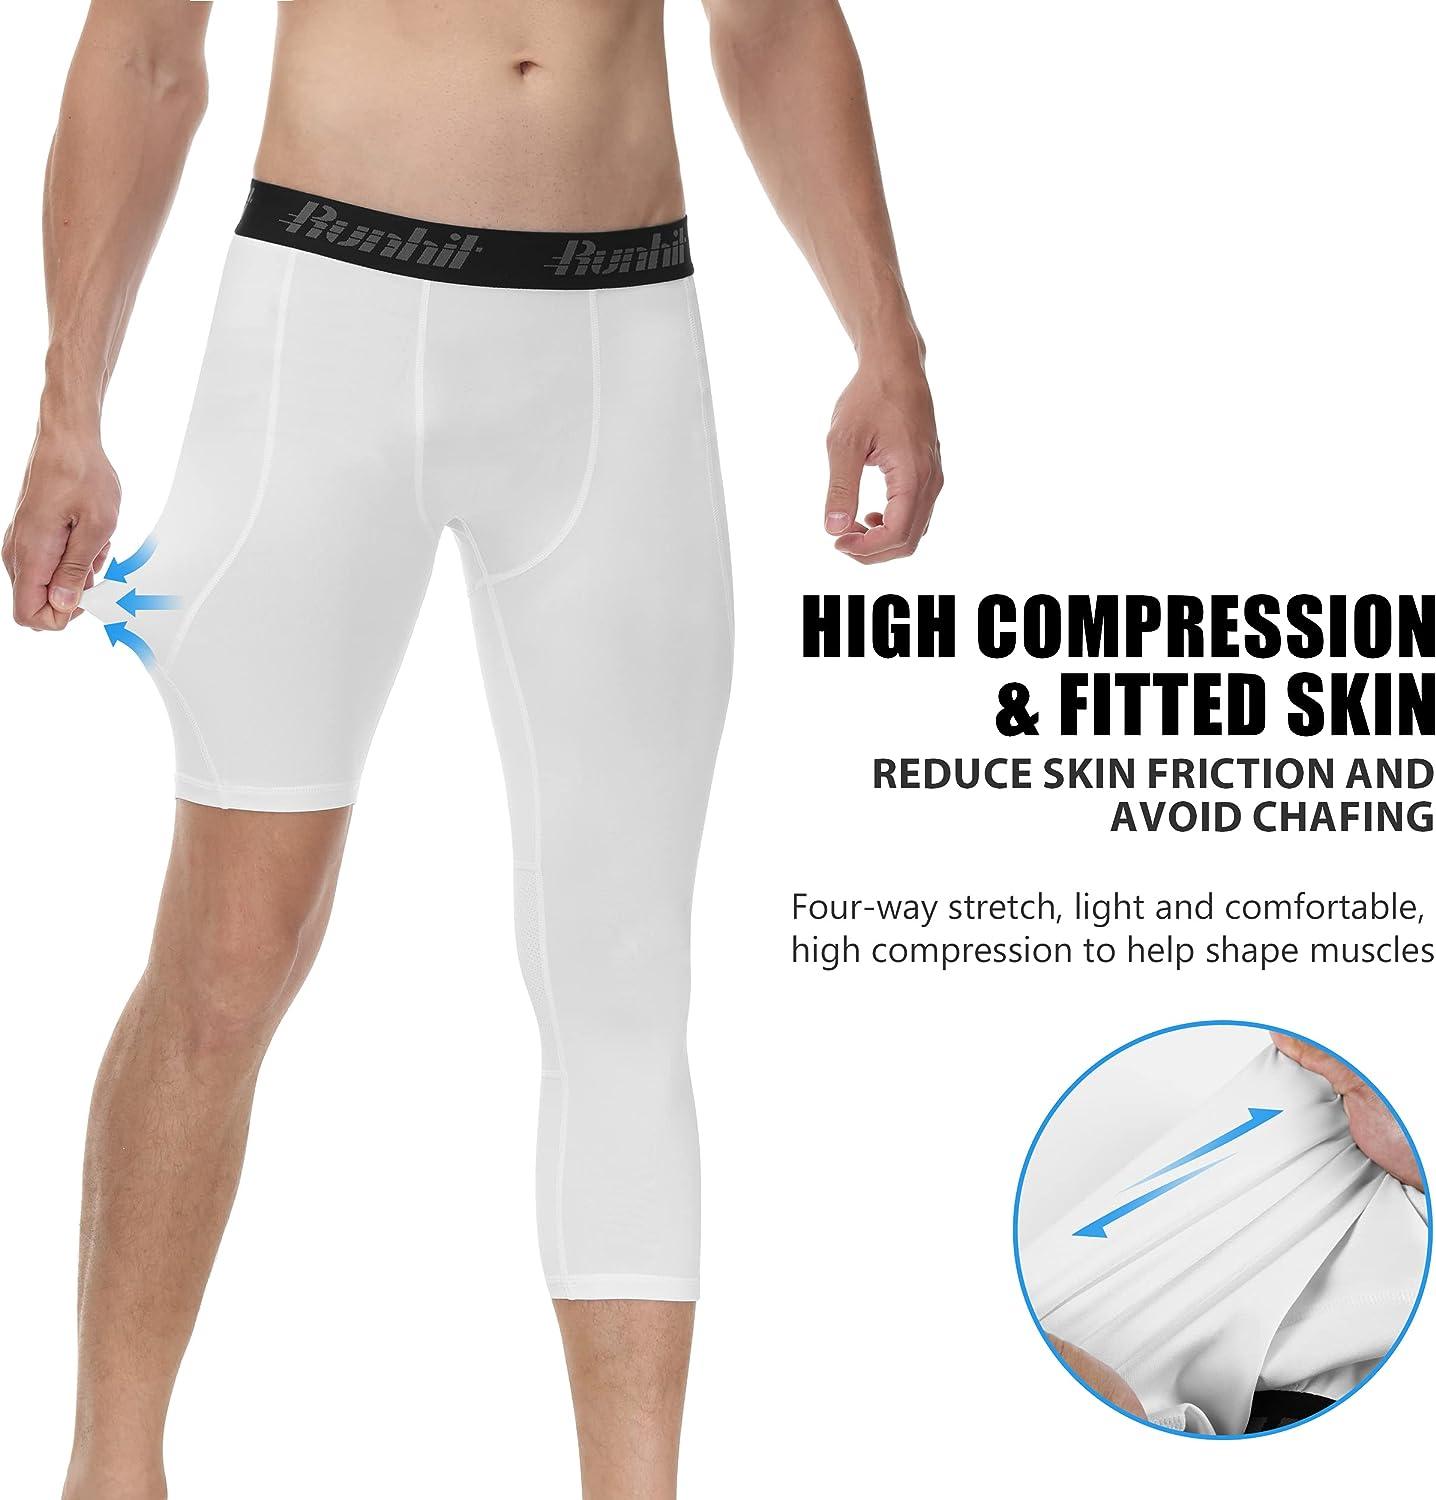 We Ball Sports Athletic Men's Single Leg Sports Tights  One Leg Compression  Base Layer Leggings for Men (Blue, FULL 2XL) 